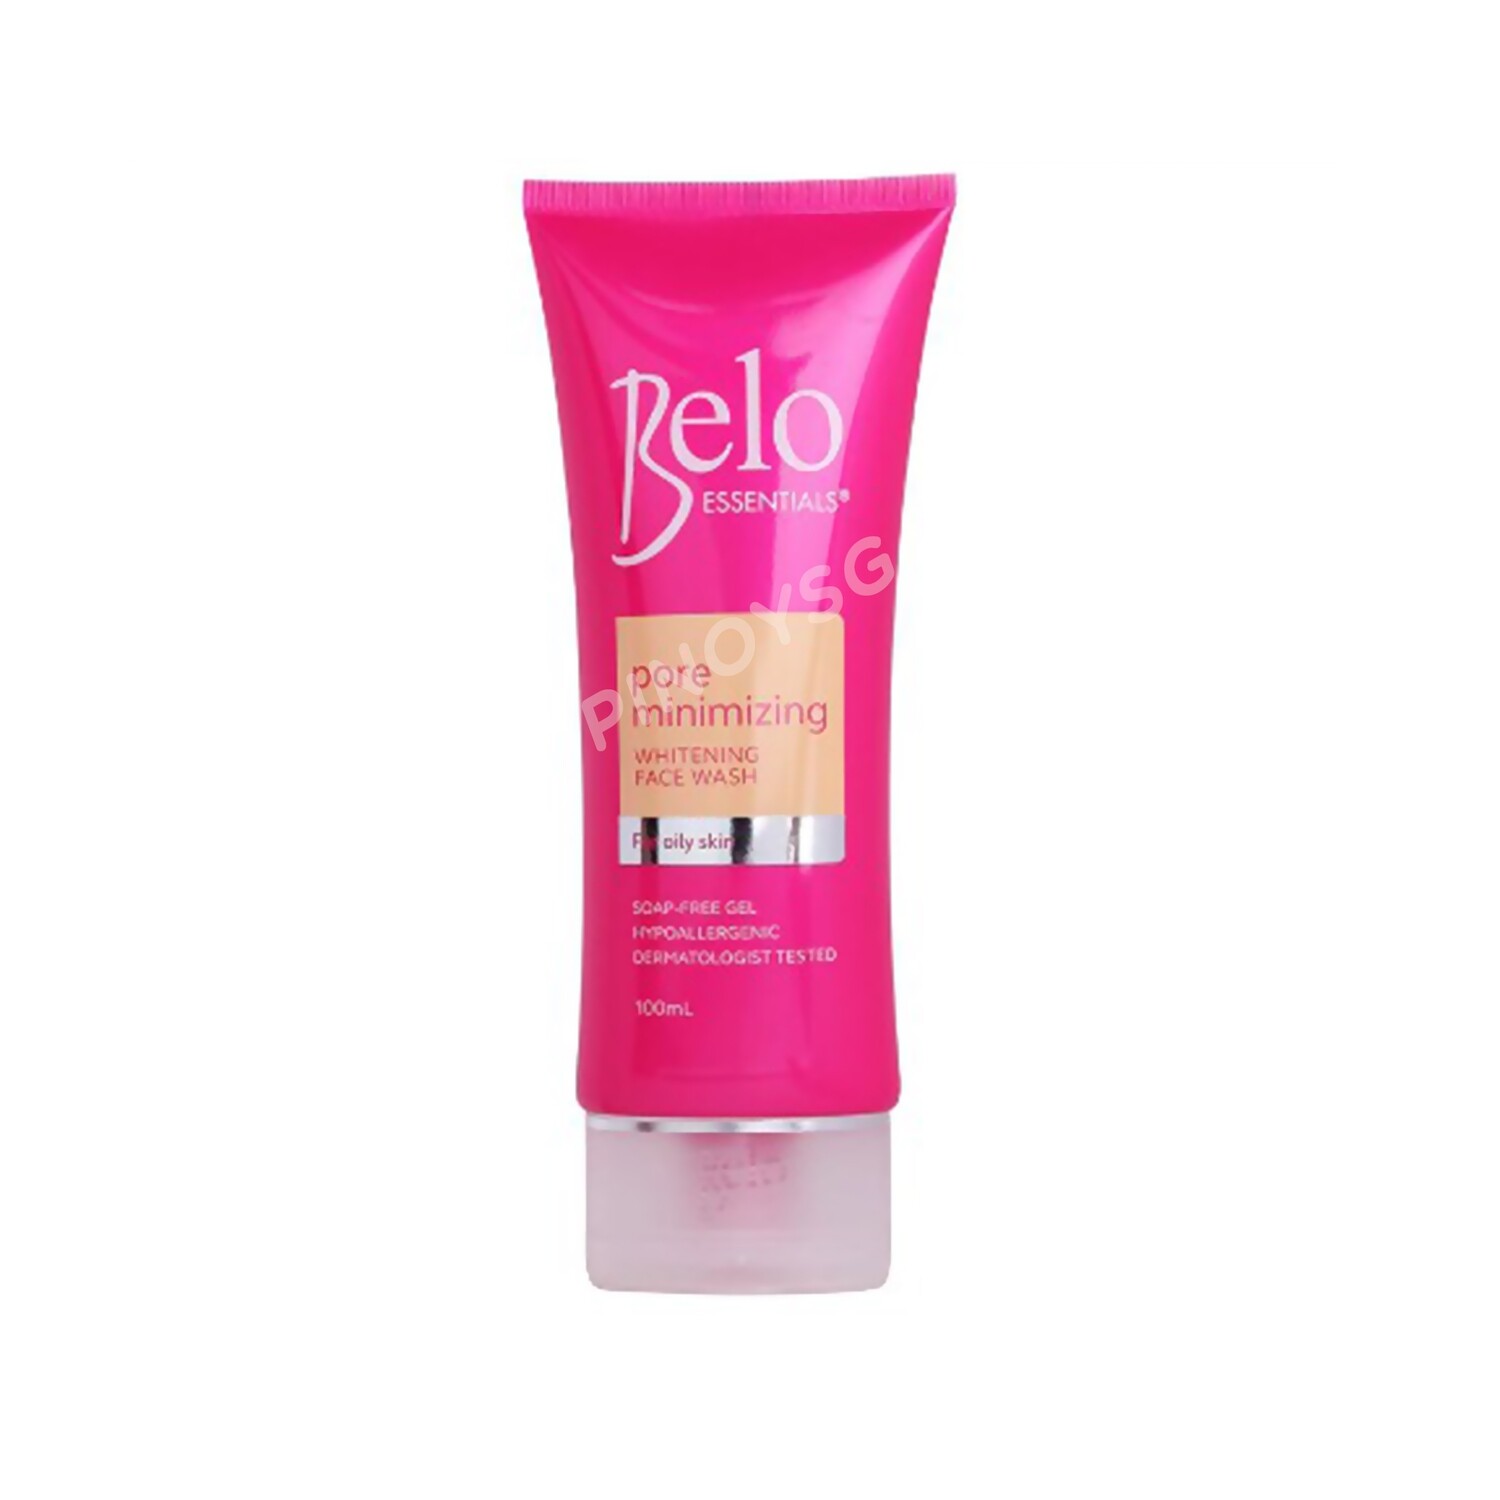 Belo Essentials Pore Minimizing Whitening Face Wash, 100ml - 40% discount Expiry Oct 2023